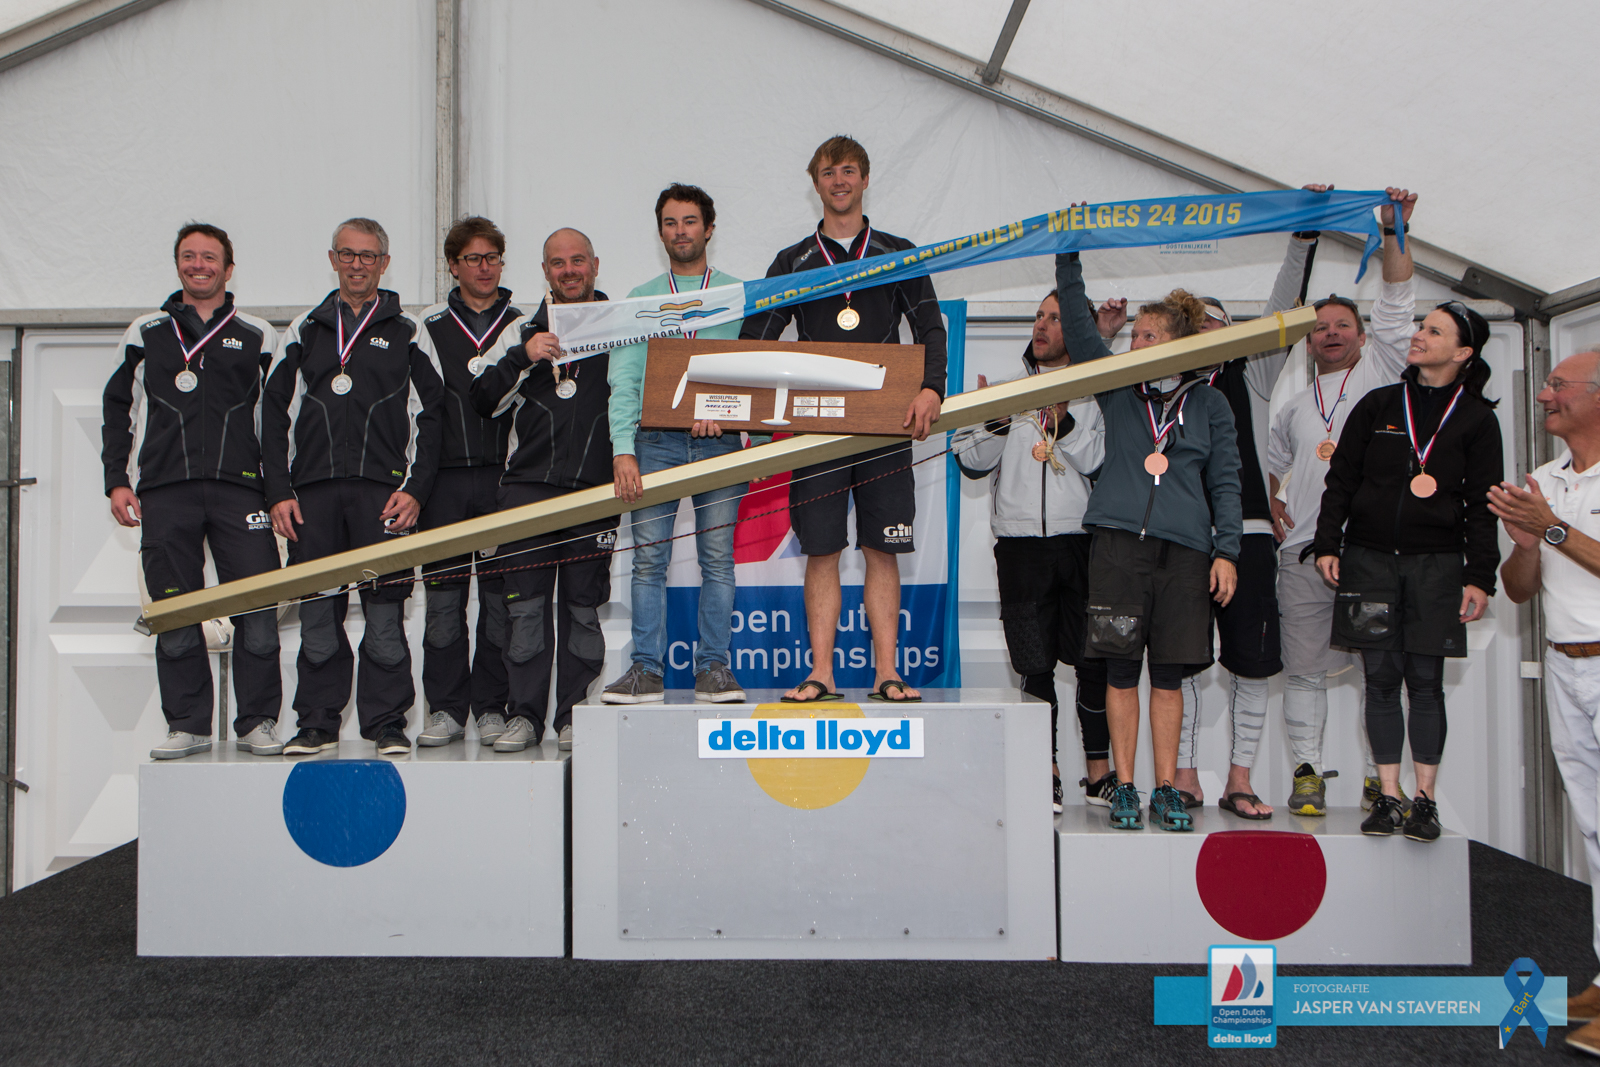 Melges 24 Top 3 teams of the Dutch Open Championships - photo Jasper van Stavere